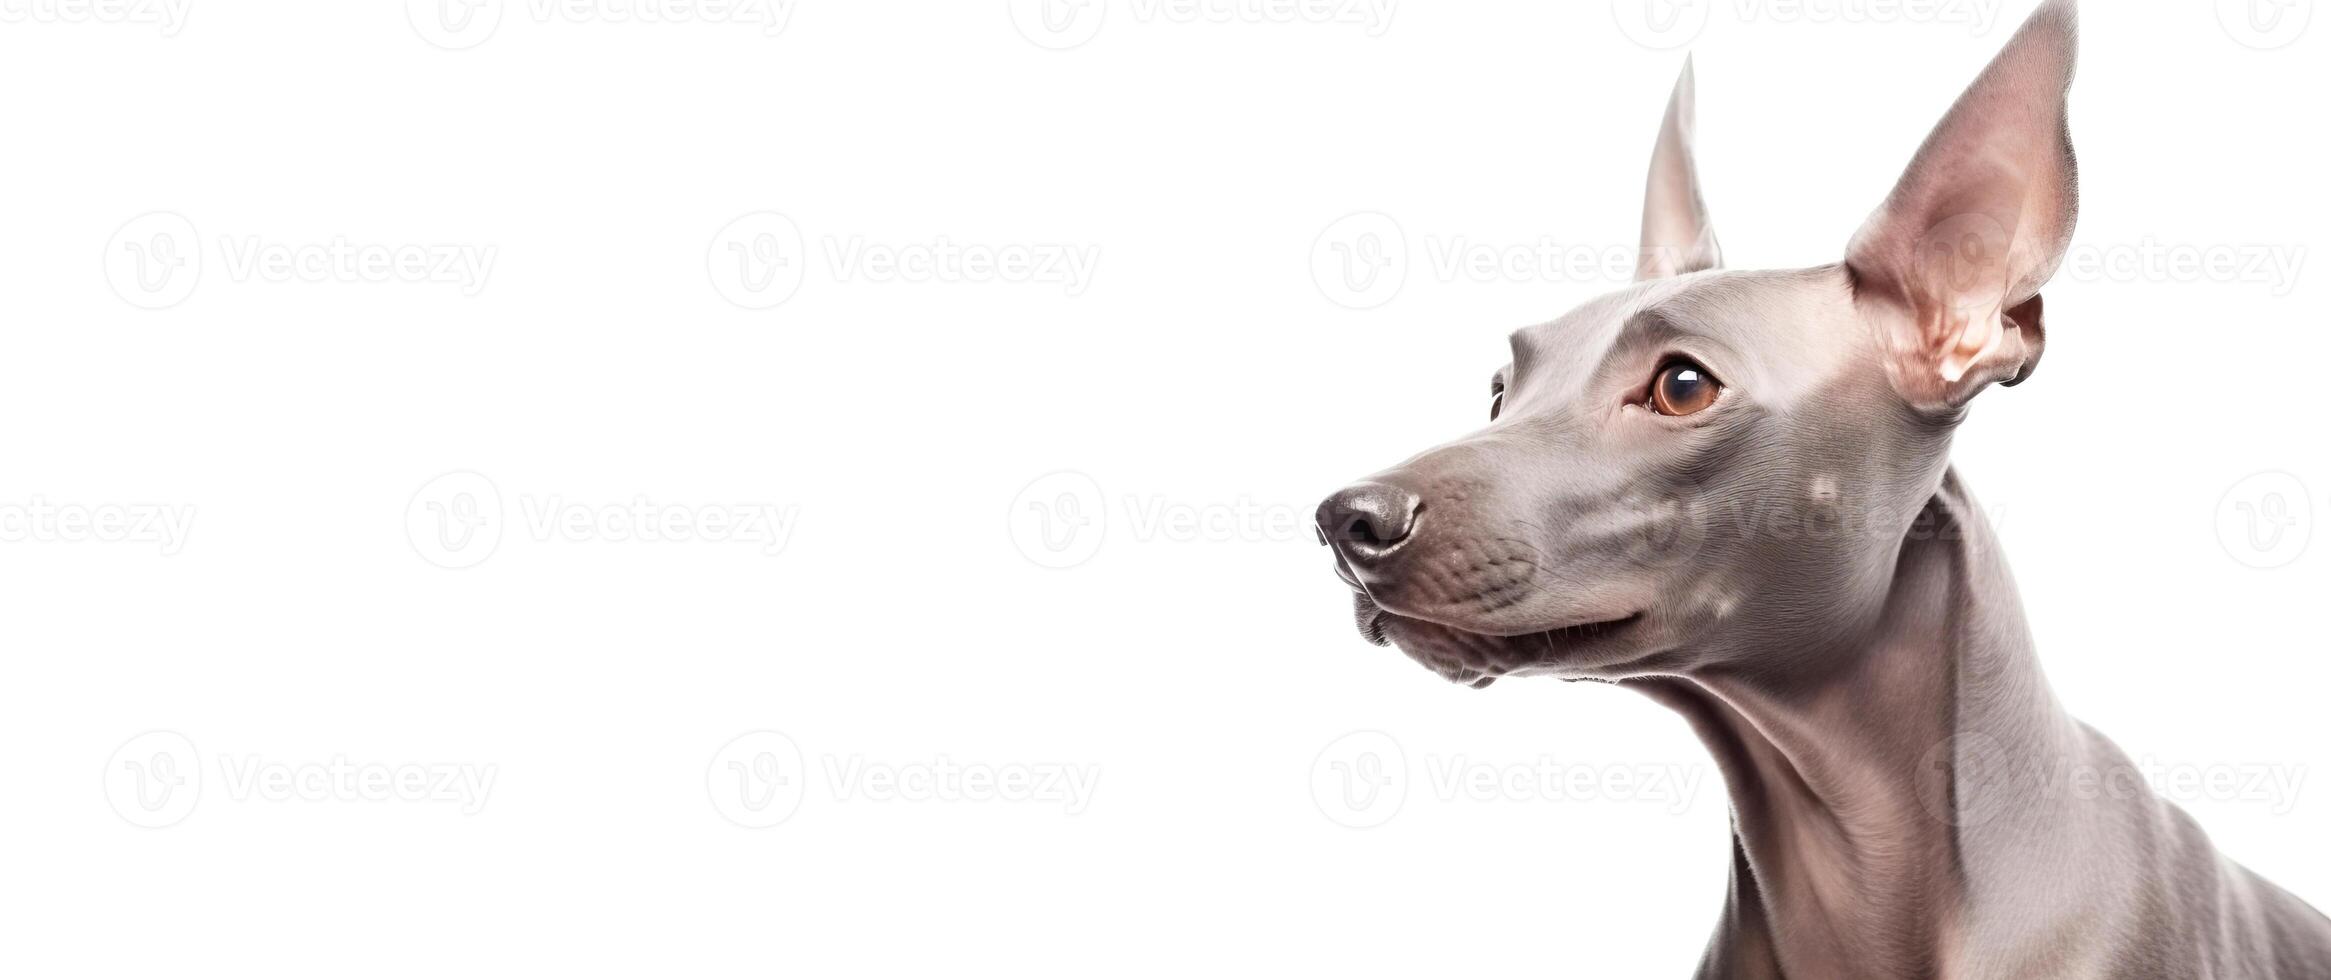 AI generated Mexican Hairless Dog Xoloitzcuintli purebred beautiful breed of dog, background nature photo